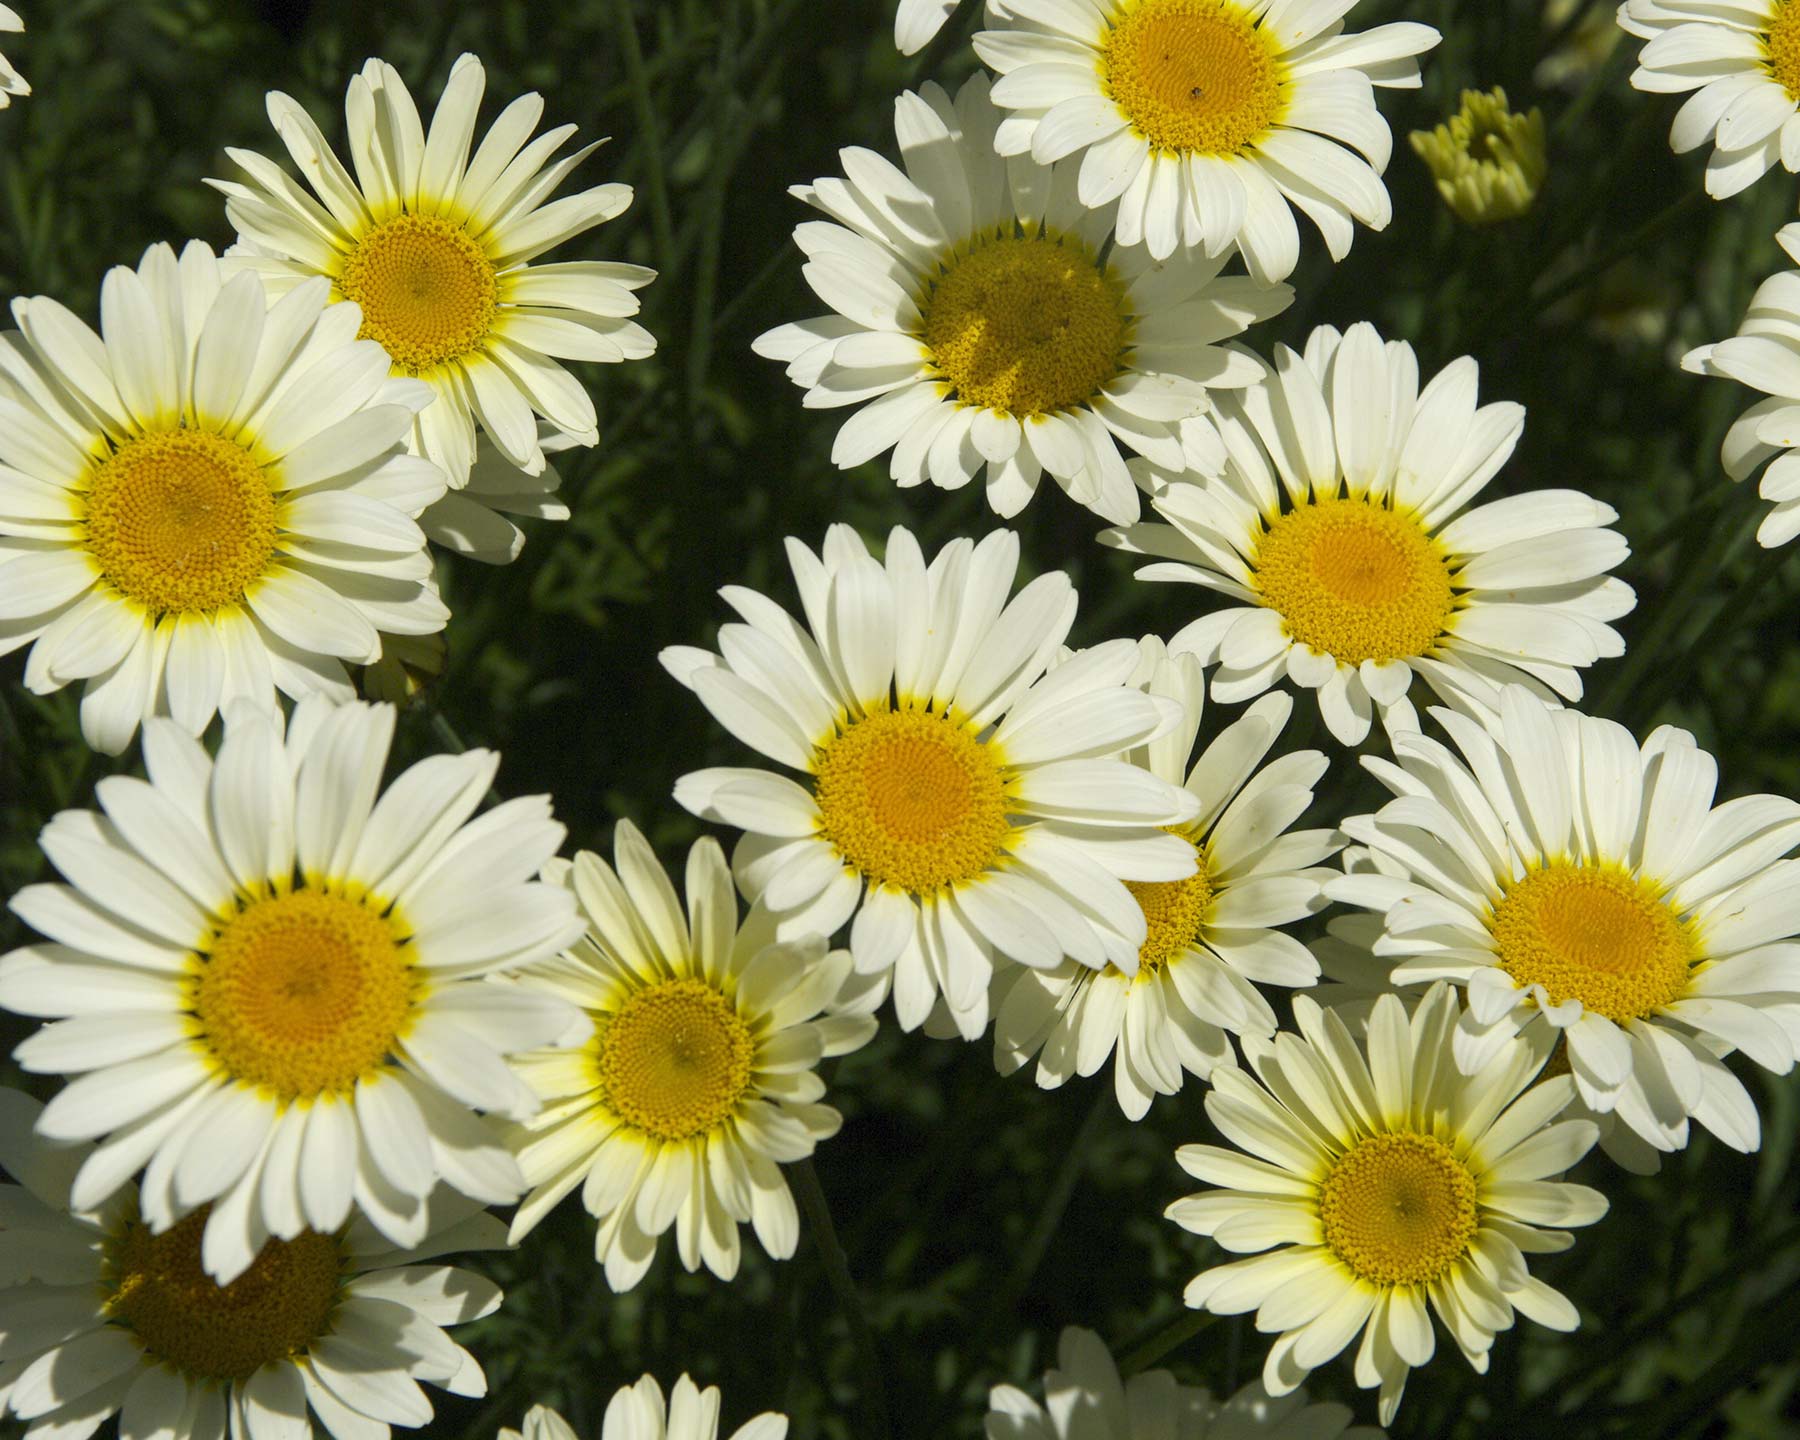 Anthemis tinctoria 'Susanna Mitchell' - creamy white daisy-like flowers with yellow centres